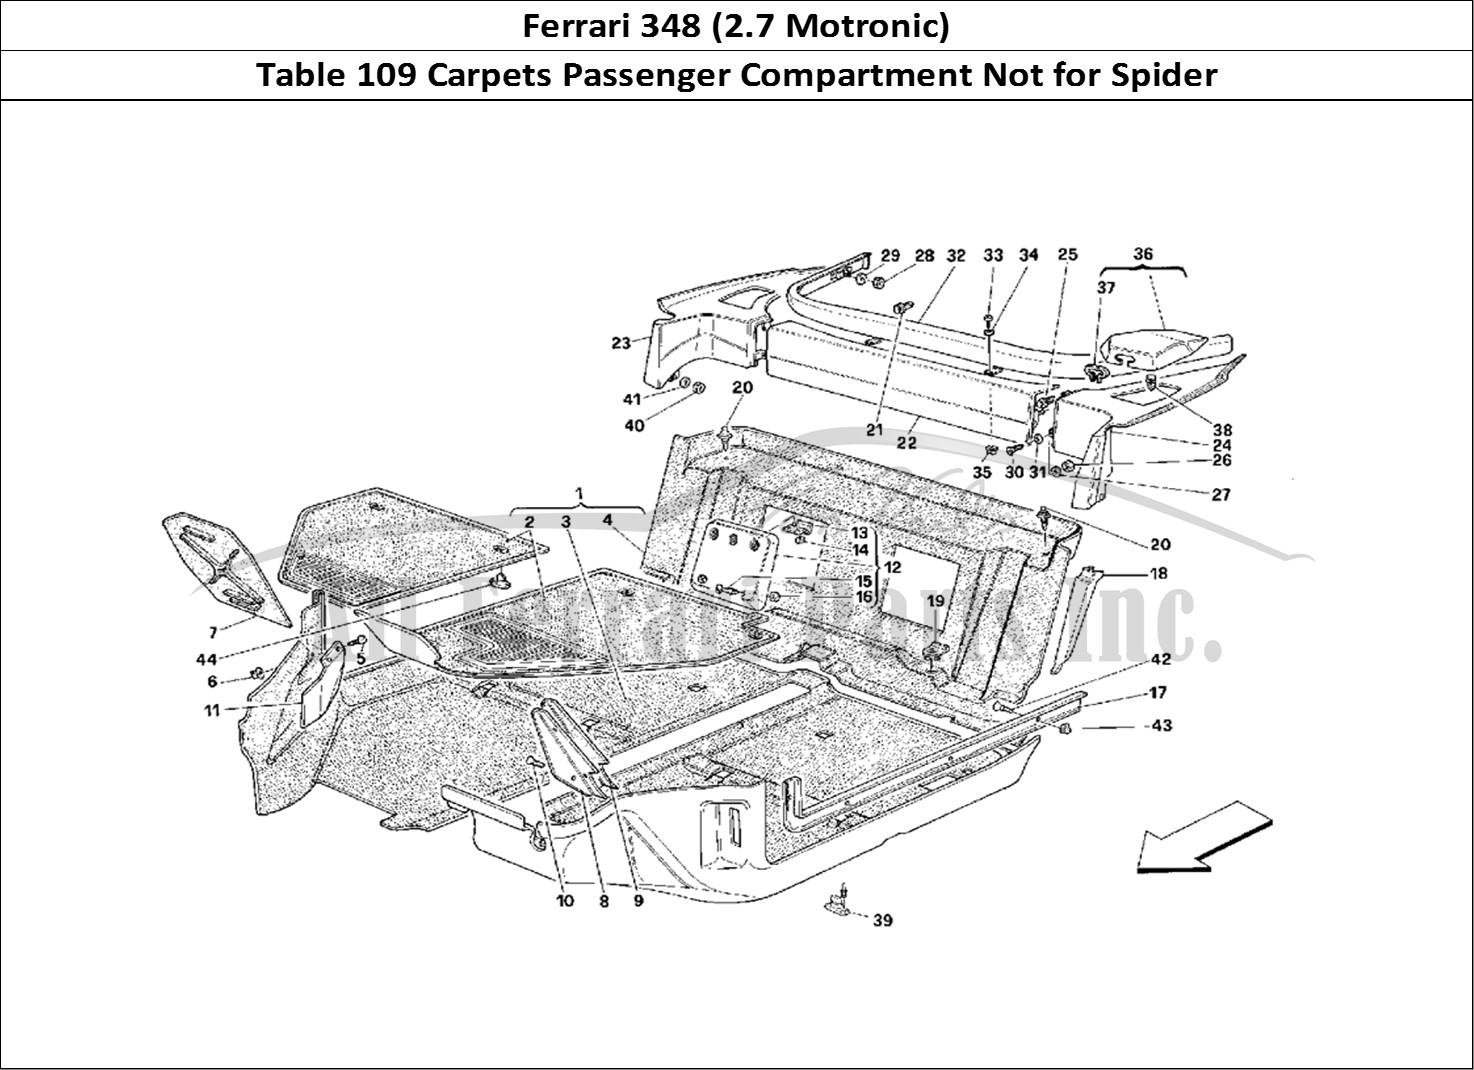 Ferrari Parts Ferrari 348 (2.7 Motronic) Page 109 Passengers Compartment Ca